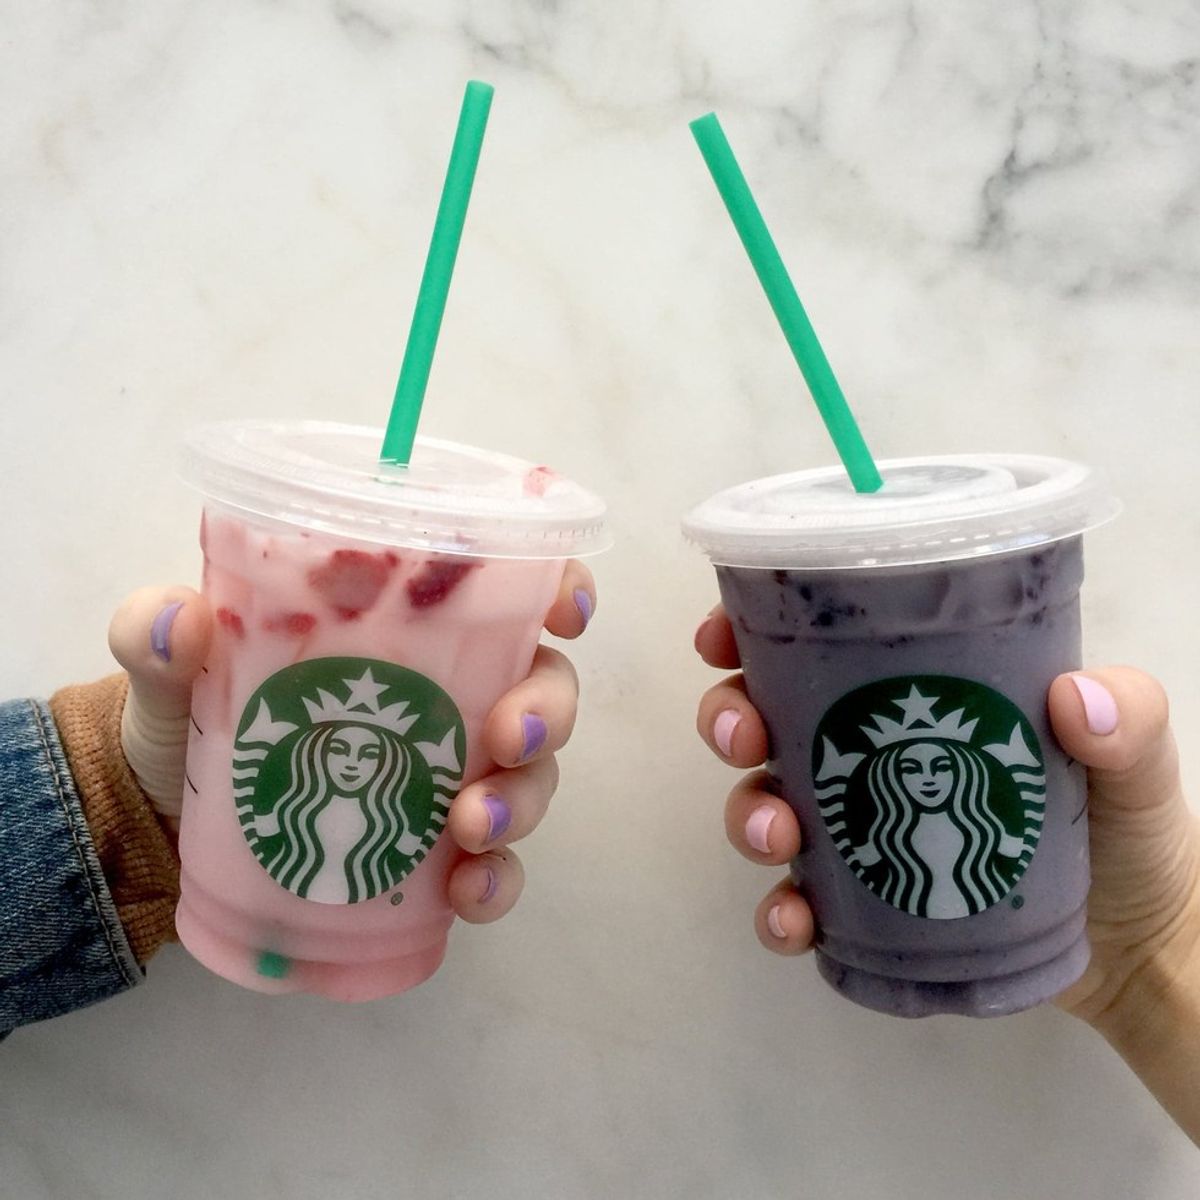 5 Starbucks Secret Menu Drinks You Must Try This Summer